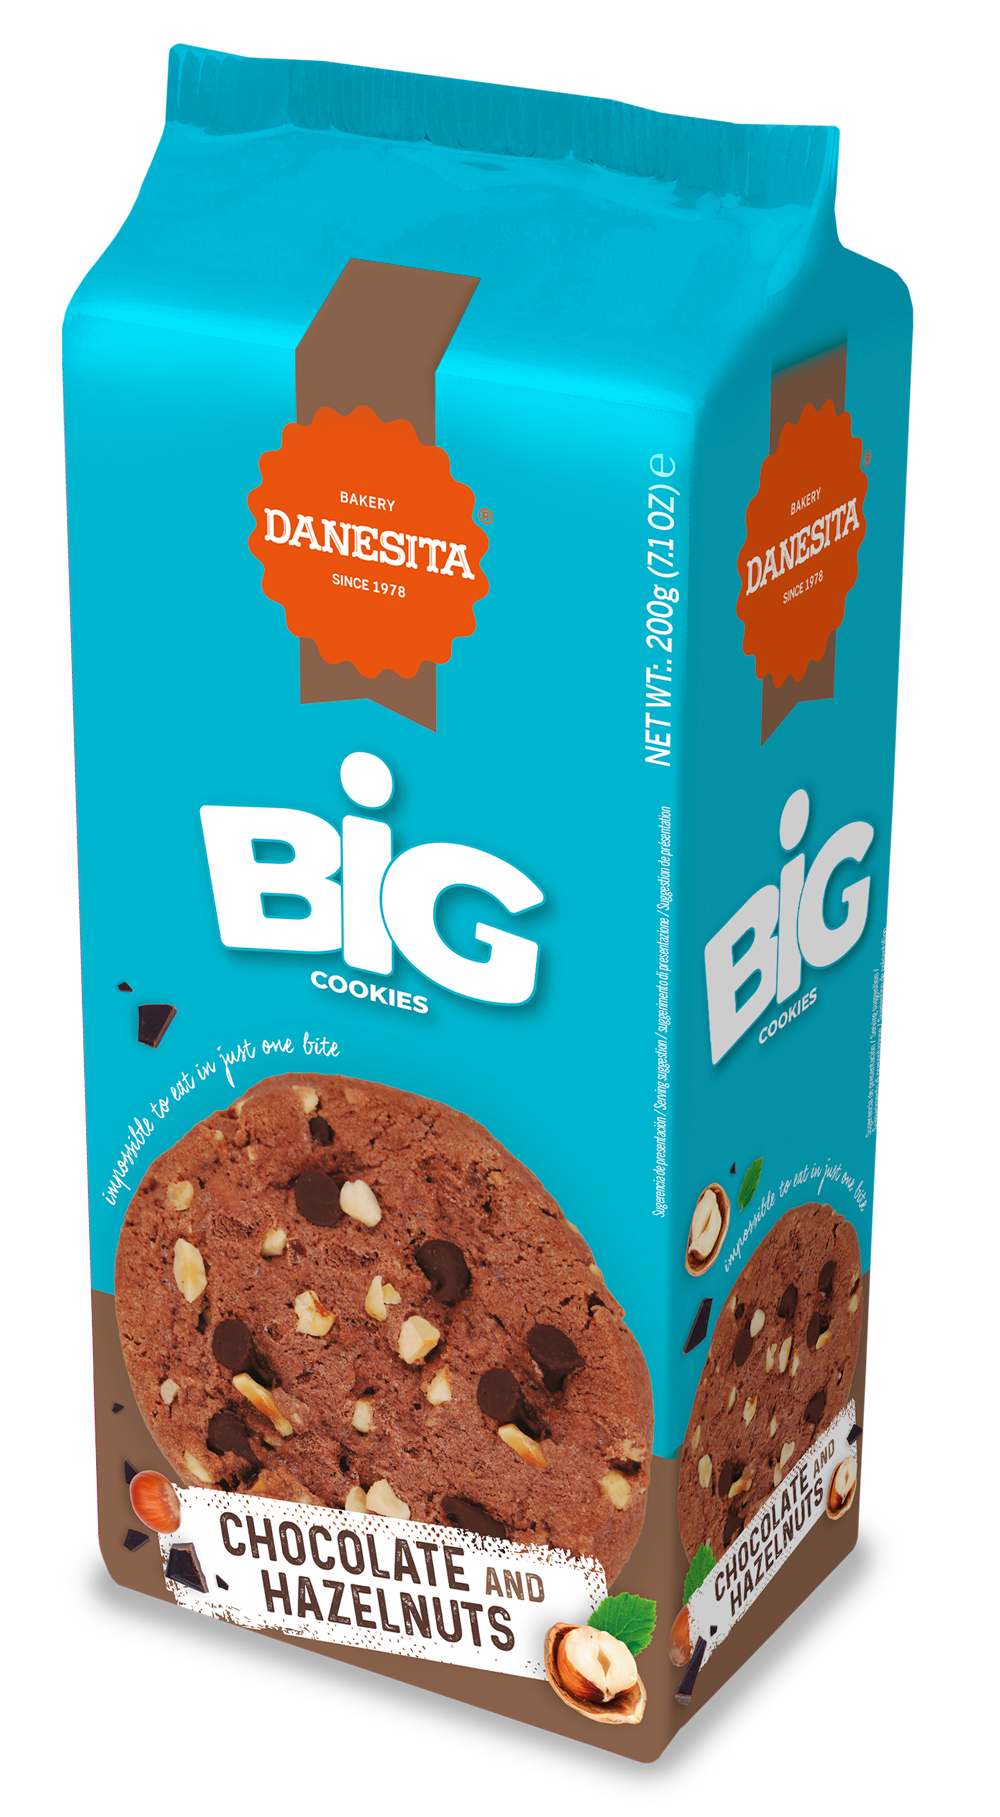 Big Cookies – Image